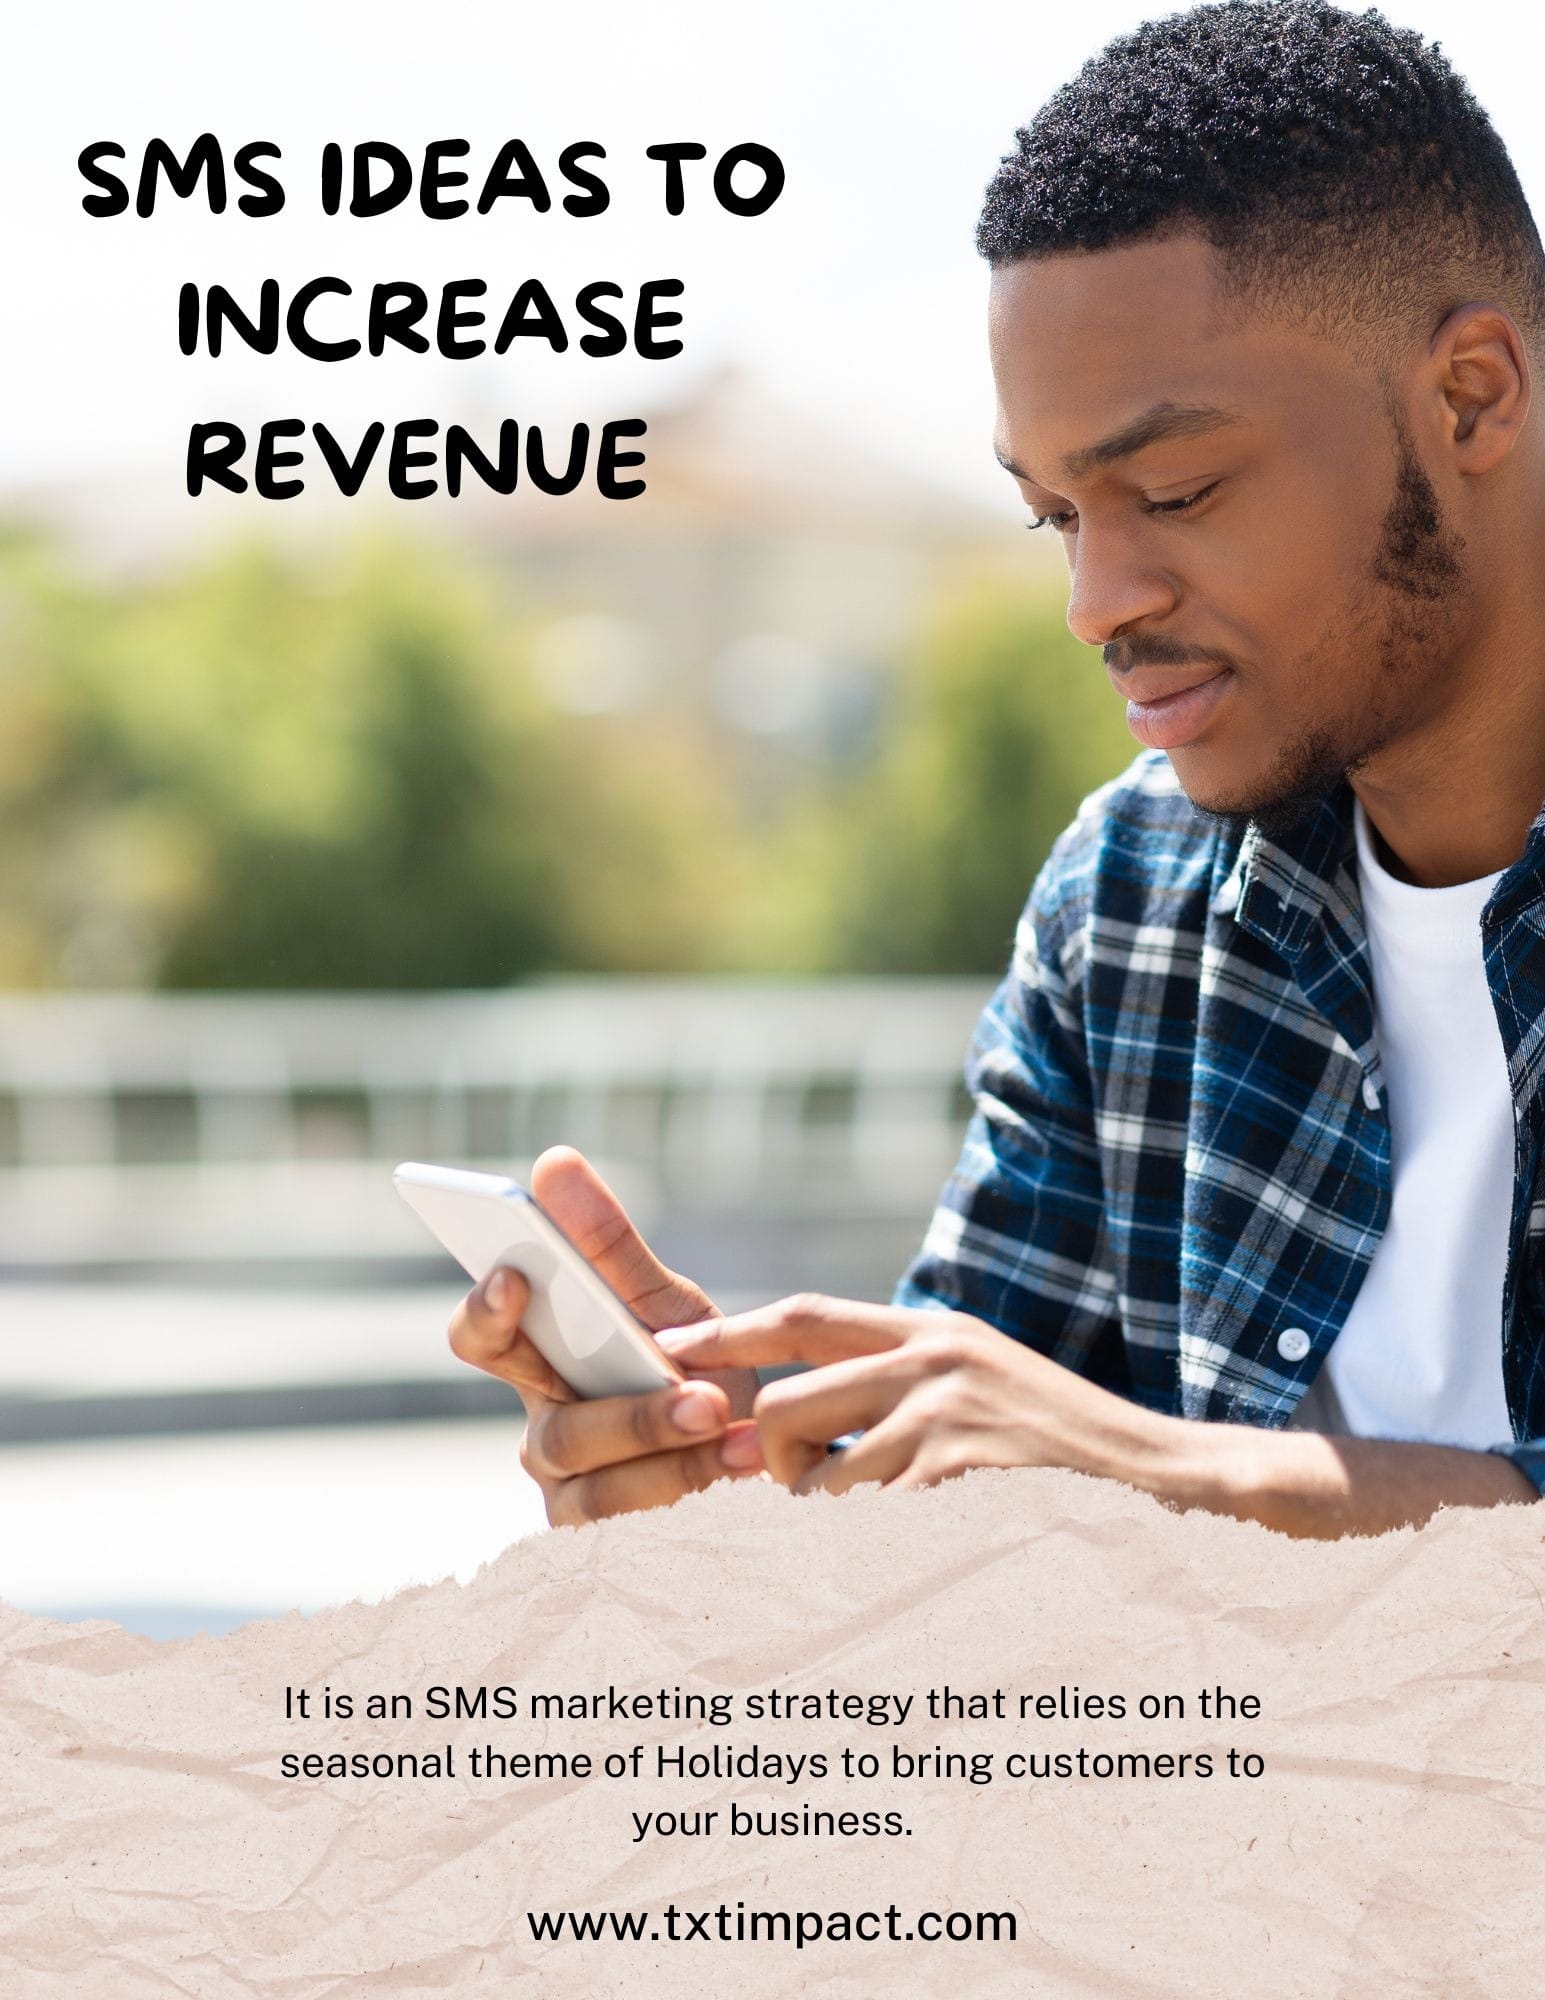 SMS Ideas to Increase Revenue.jpg